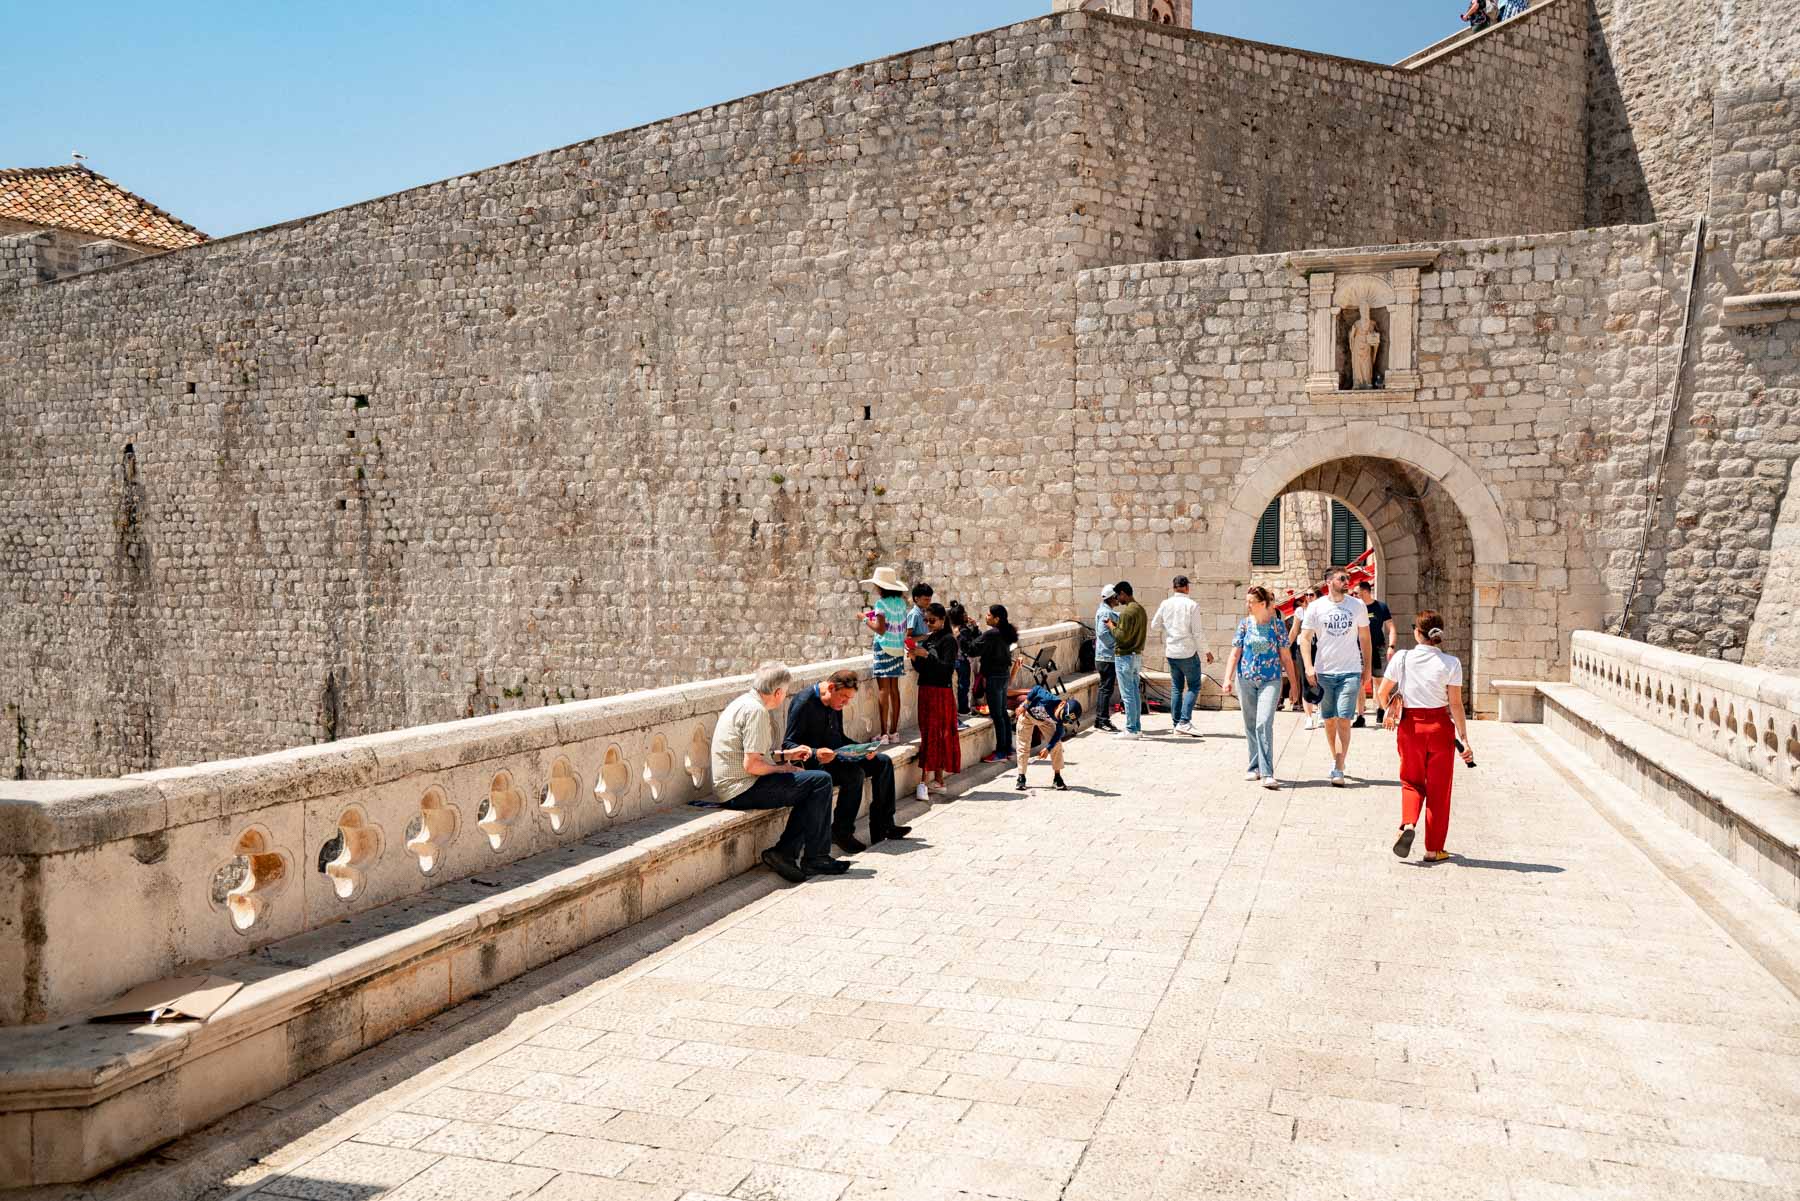 Game of Thrones Dubrovnik scenes